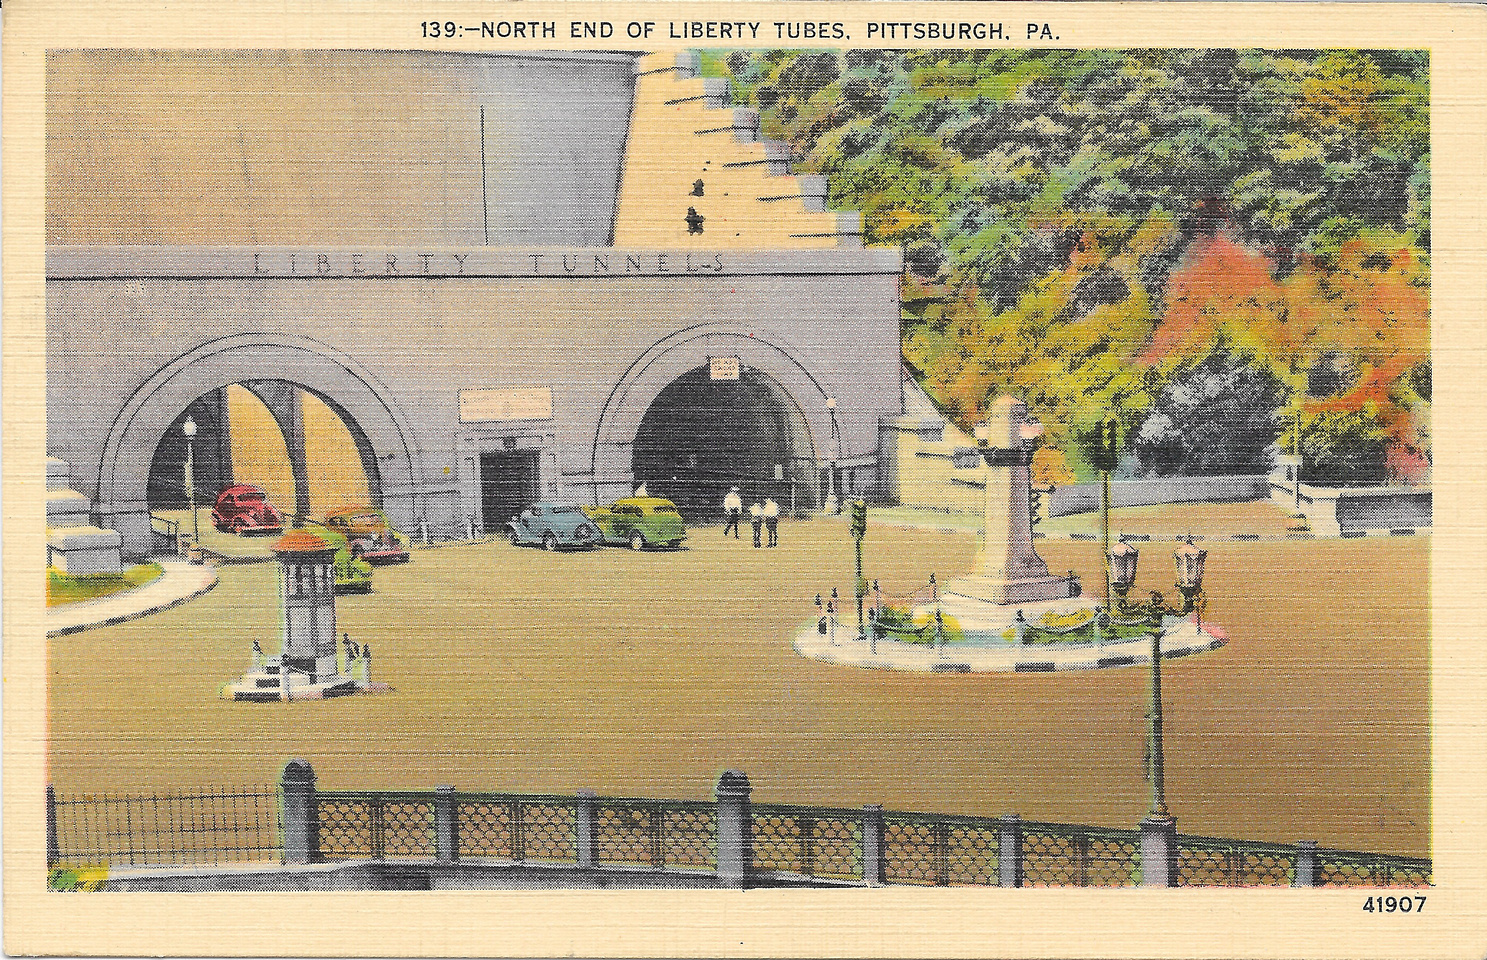 Michelle M. Murosky: The Postcard Collection &emdash; August 29, 1945